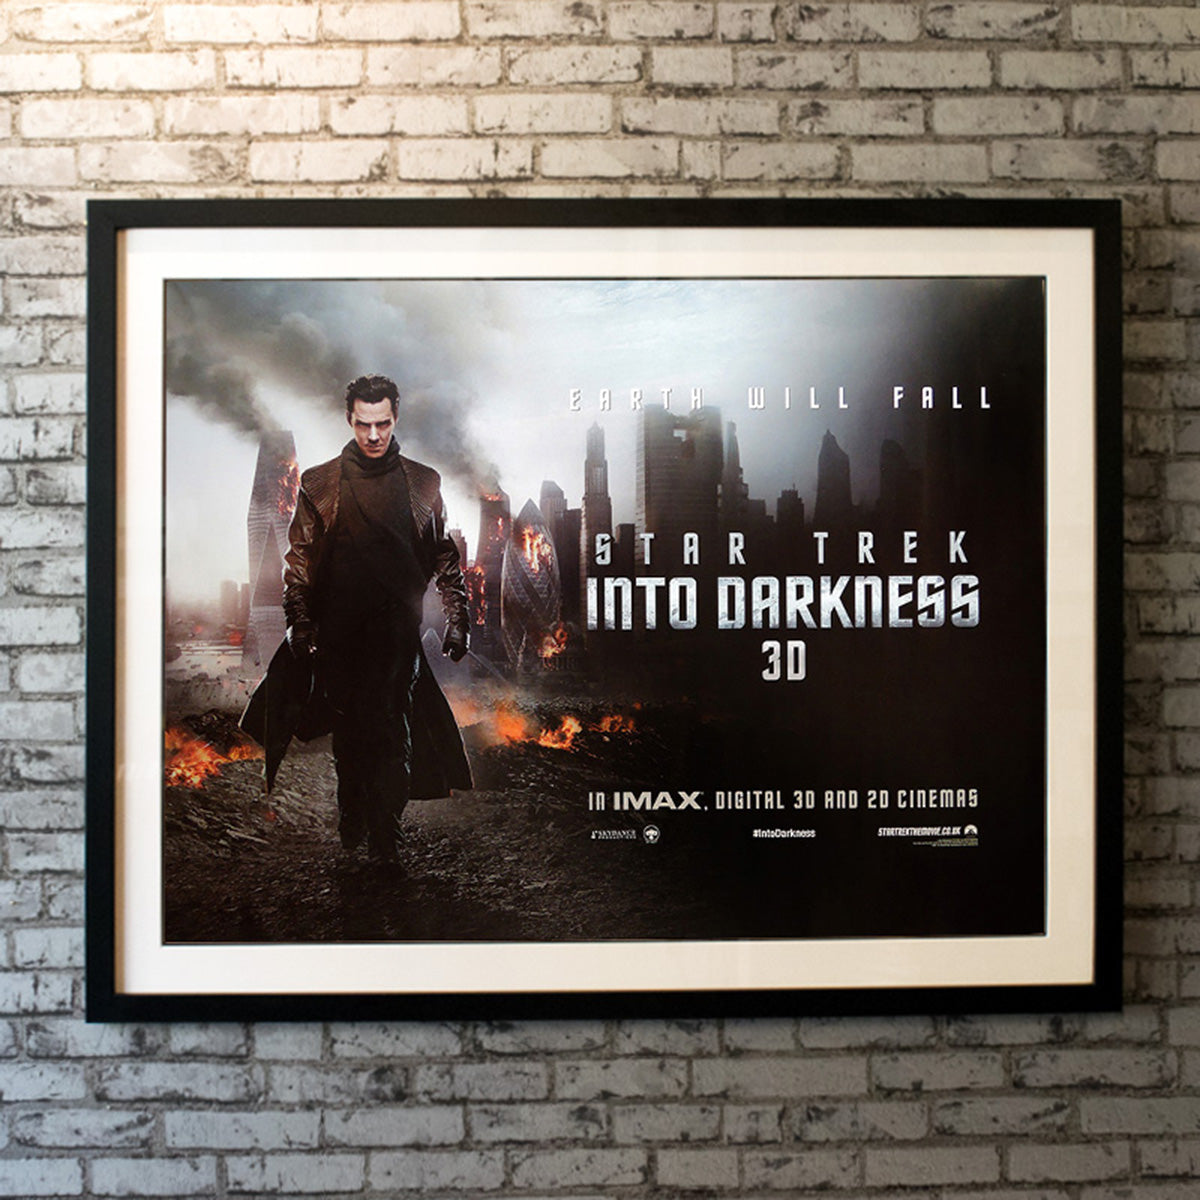 Original Movie Poster of Star Trek Into Darkness (2013)